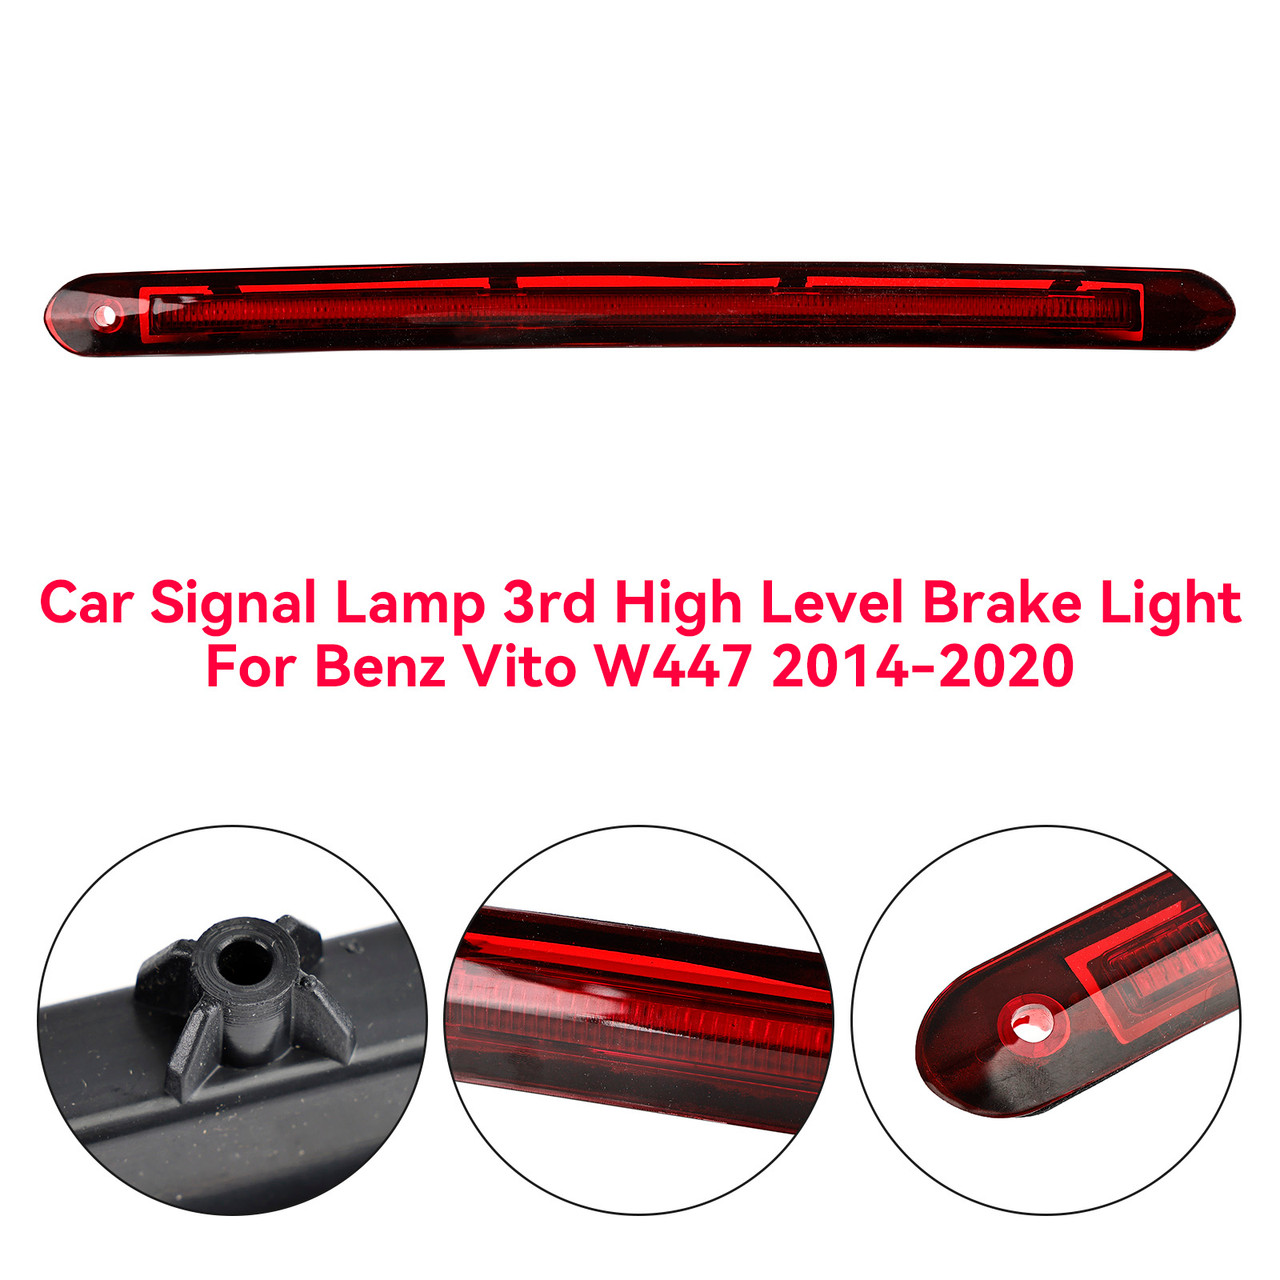 Car Signal Lamp 3rd High Level Brake Light For Benz Vito W447 2014-2020